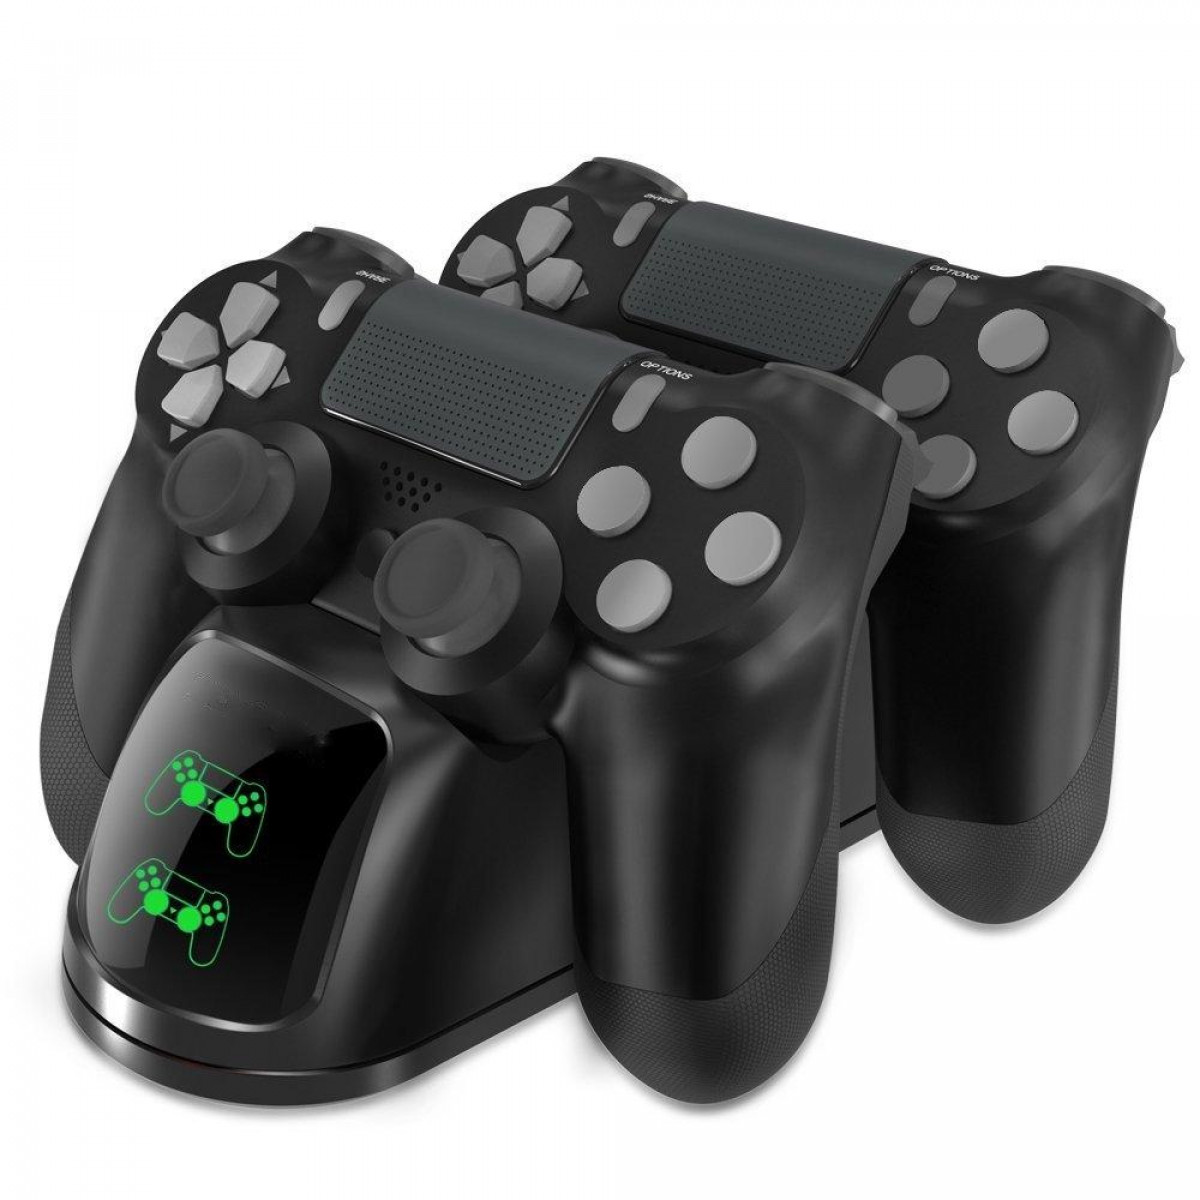 INF Doppel-Ladegerät für zwei Controller PS4/PS4 Pro Doppel-Ladegerät zwei, Slim/PS4 schwarz